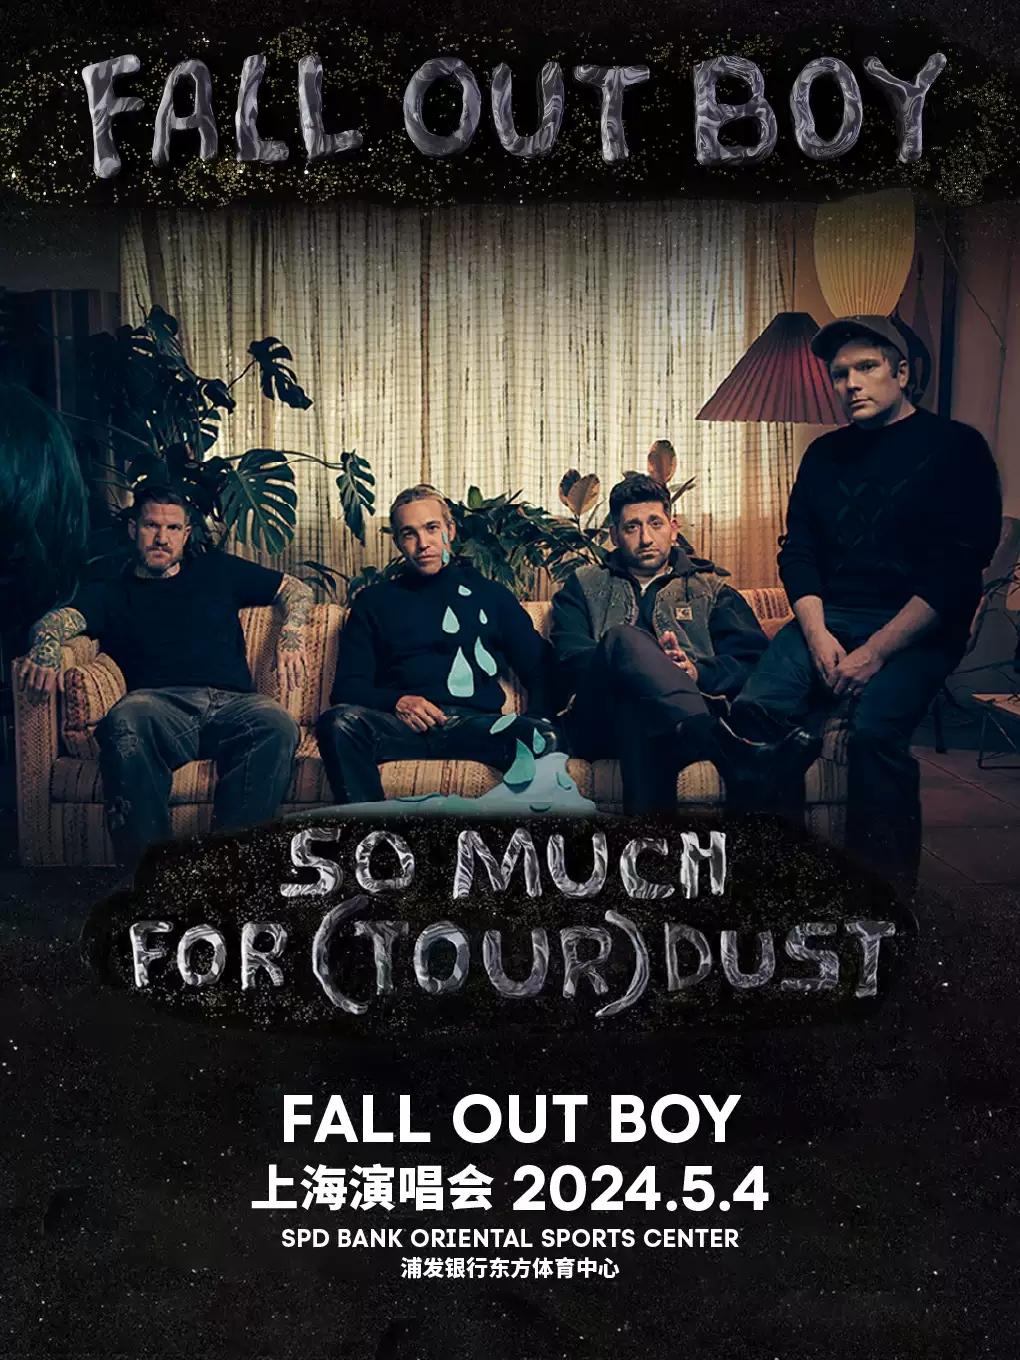 「Fall Out Boy」演唱会